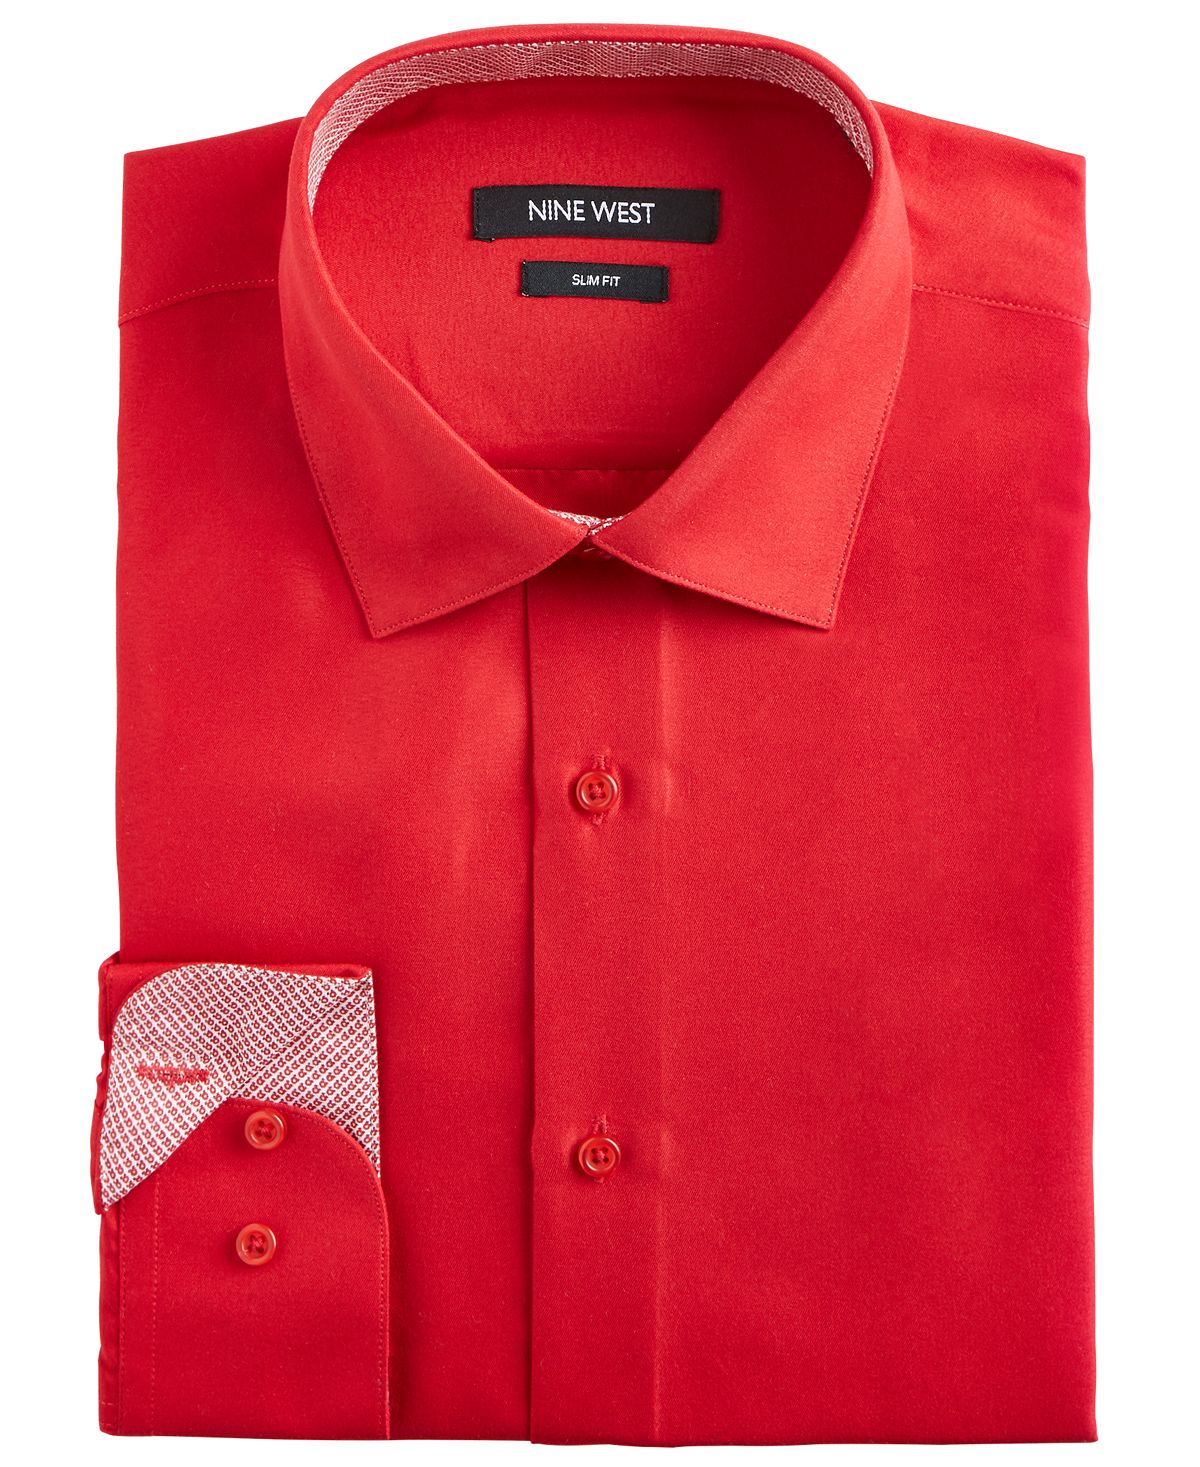 Nine West Slim-fit Wrinkle-free Performance Stretch Samba Red Dress Shirt Samba Red/white